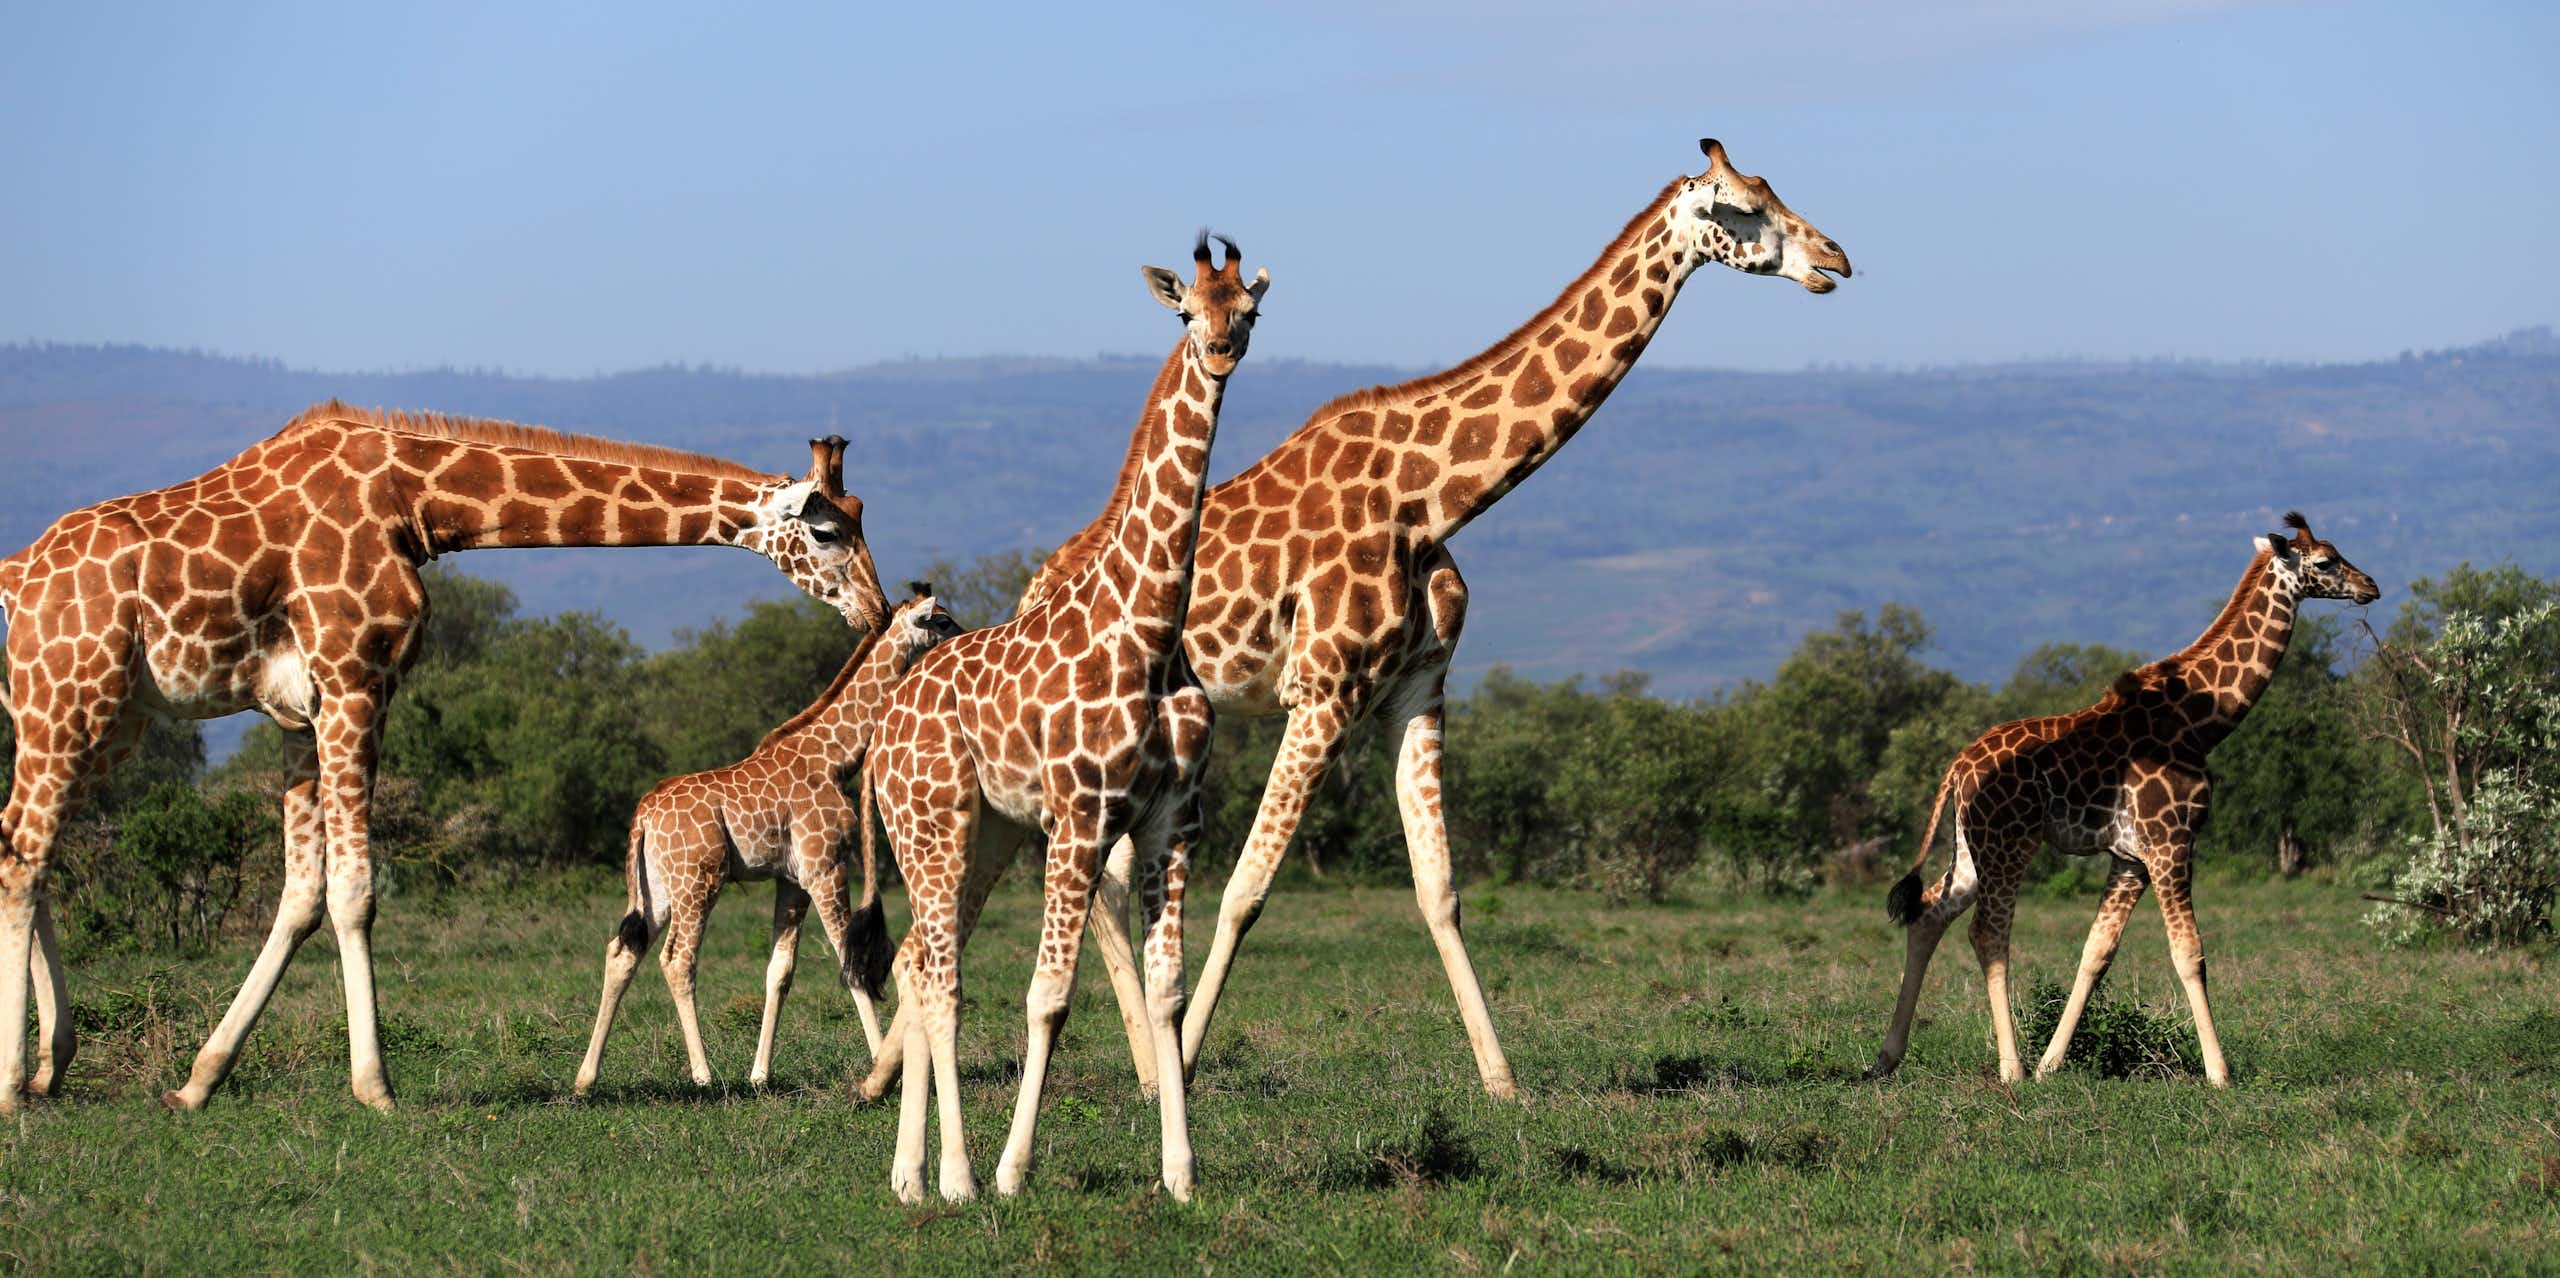 Five giraffes in a savanna landscape